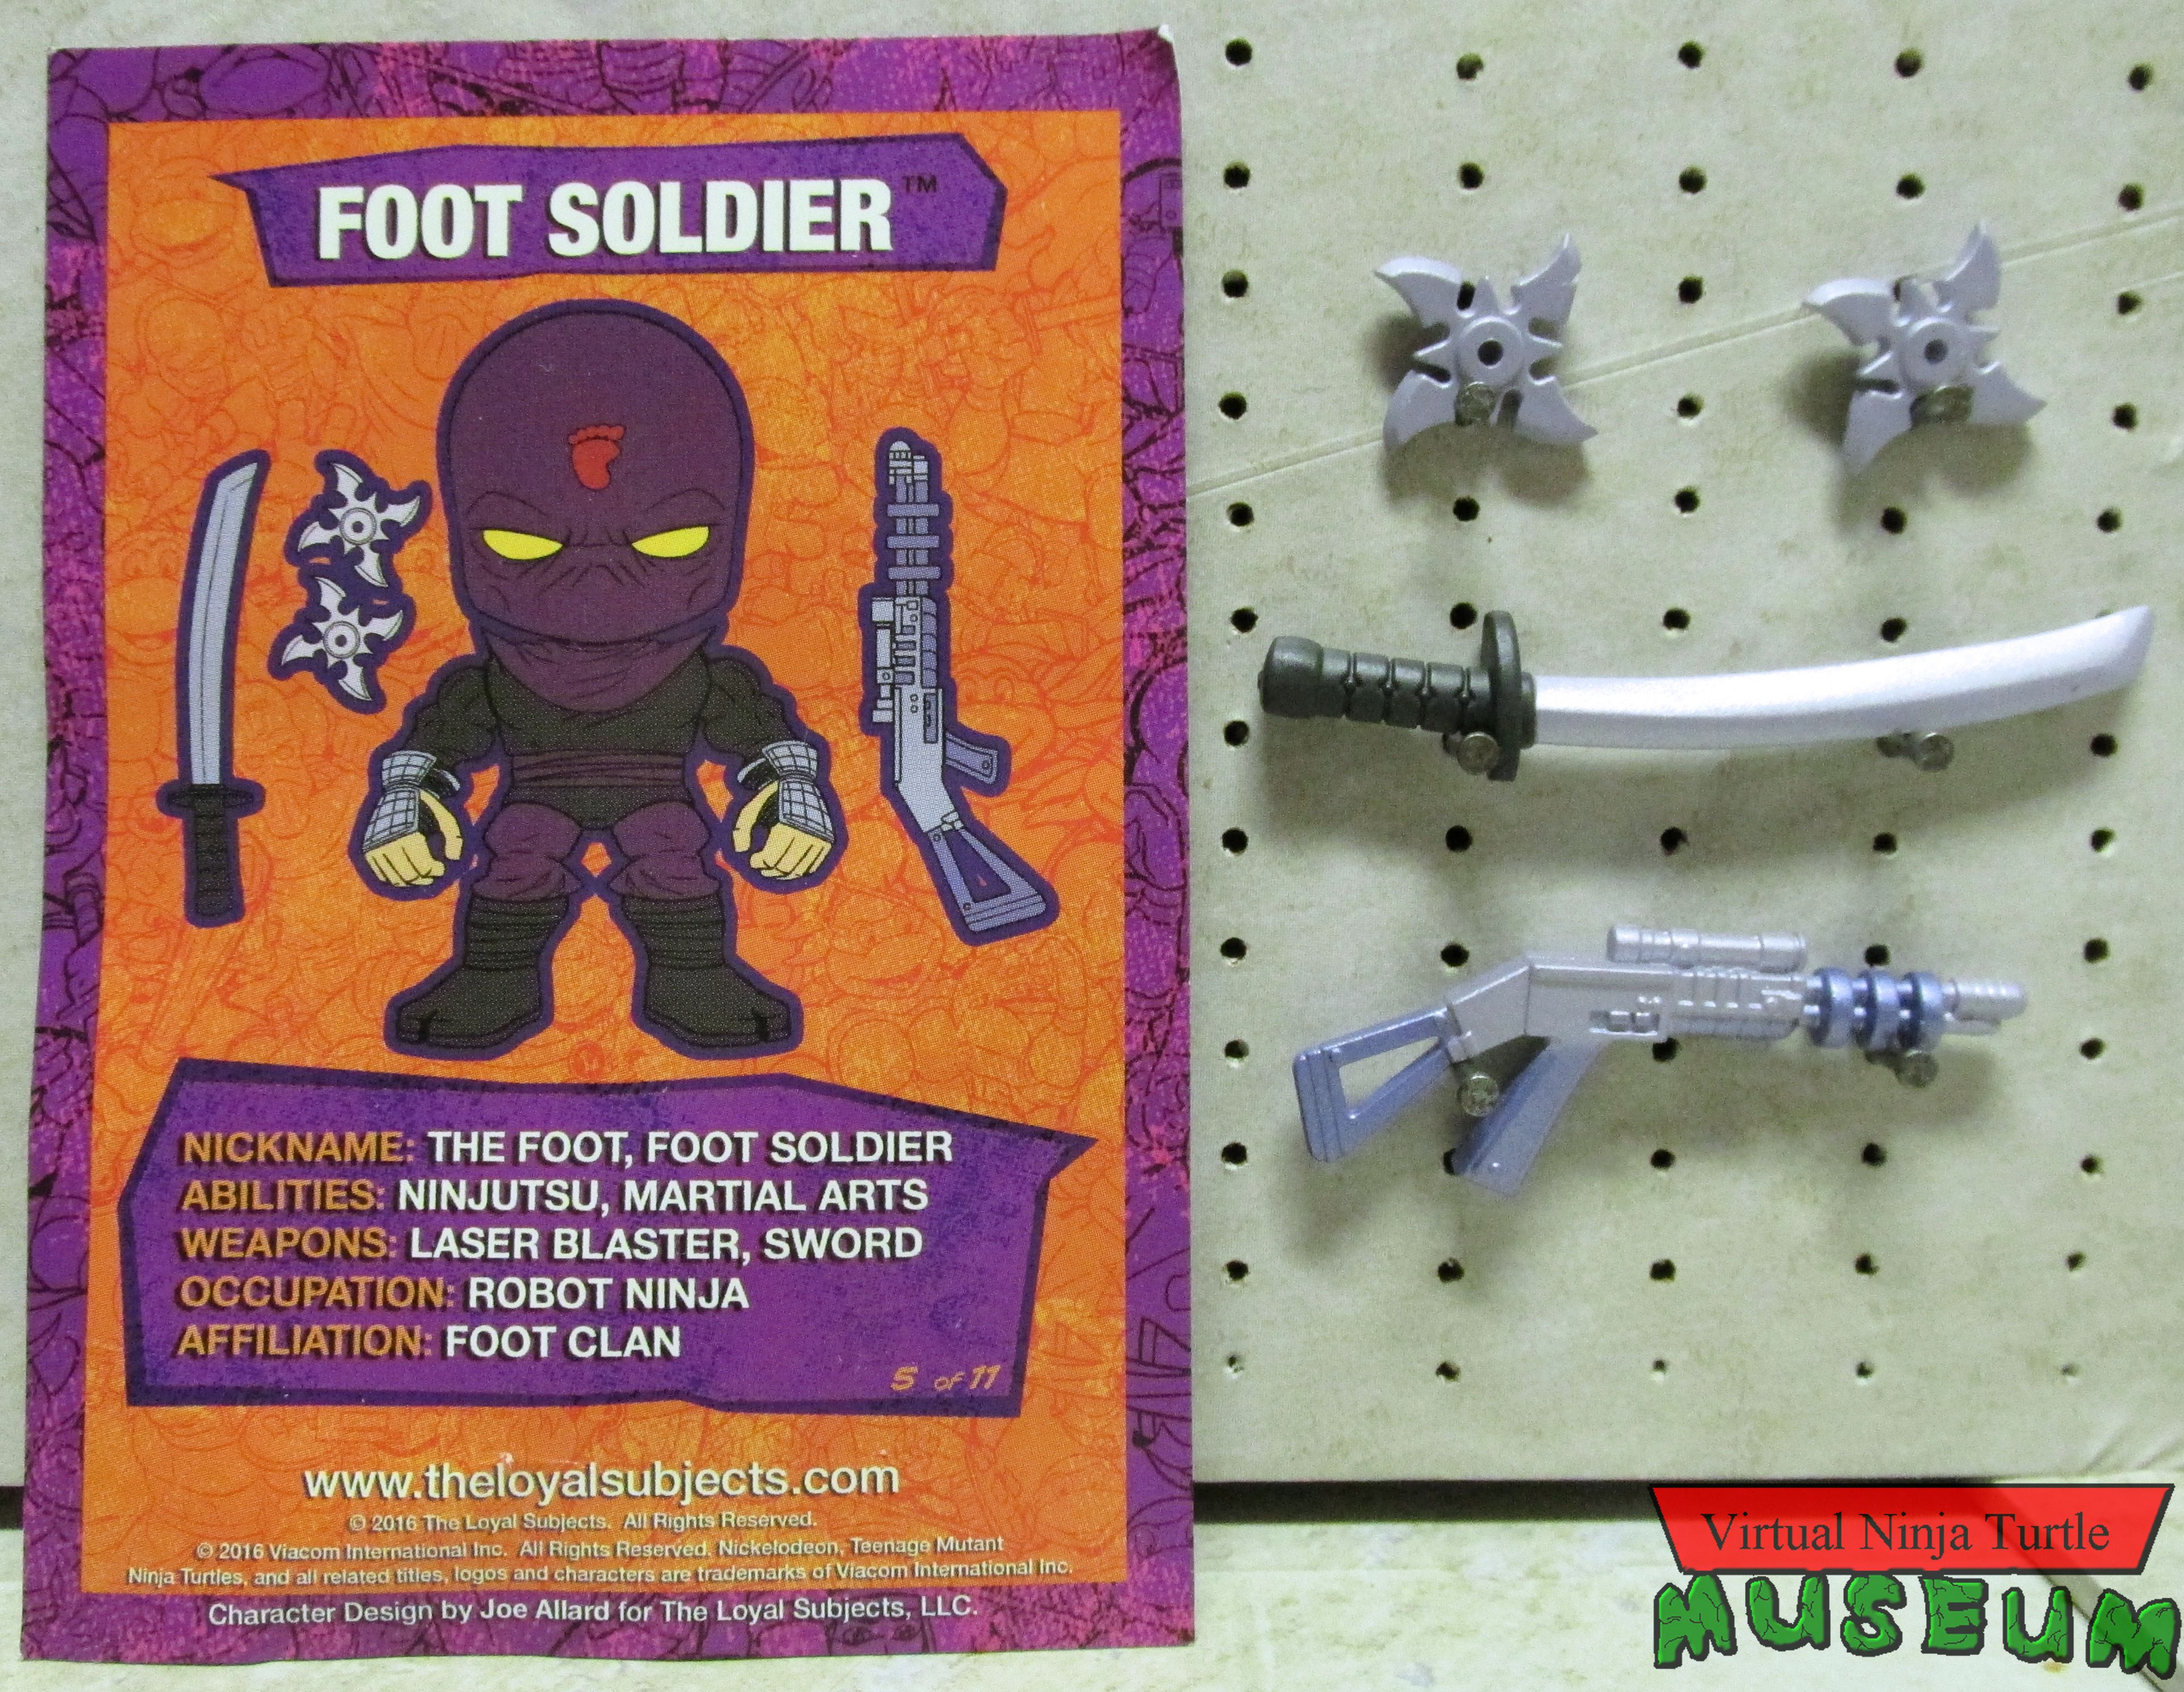 Foot Soldier's accessories